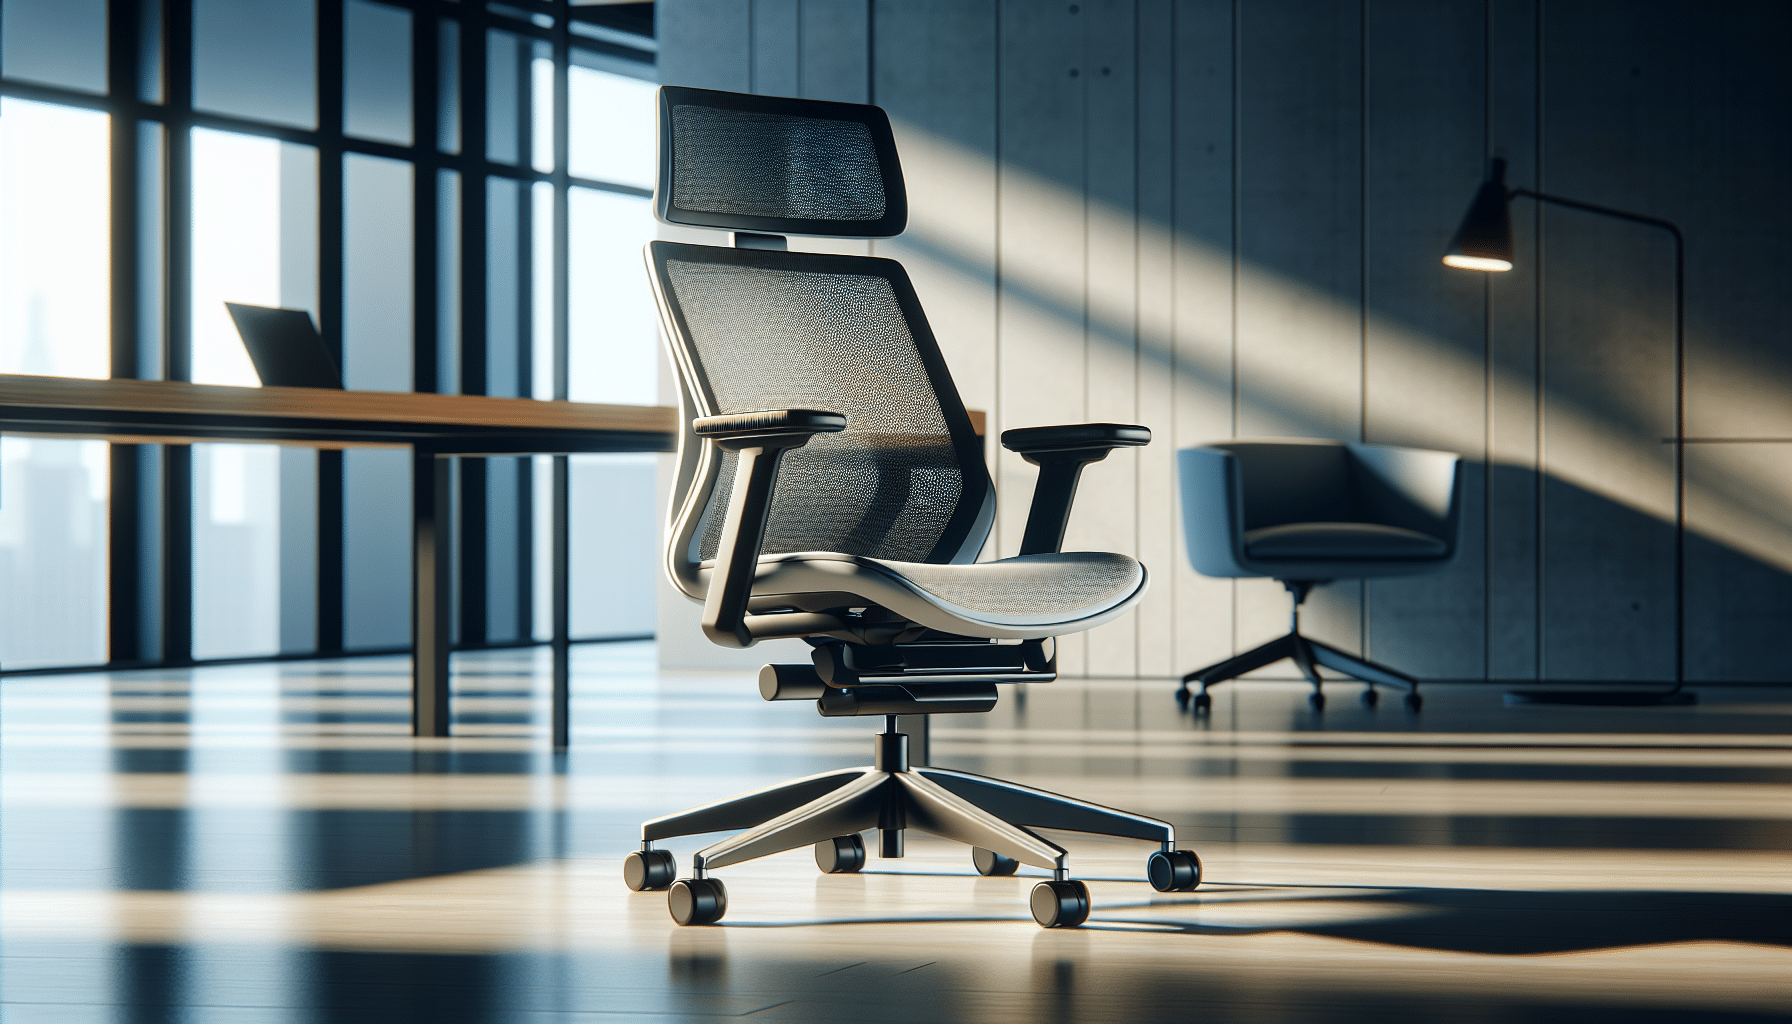 Ergonomic chair spotlight in modern, well-lit office